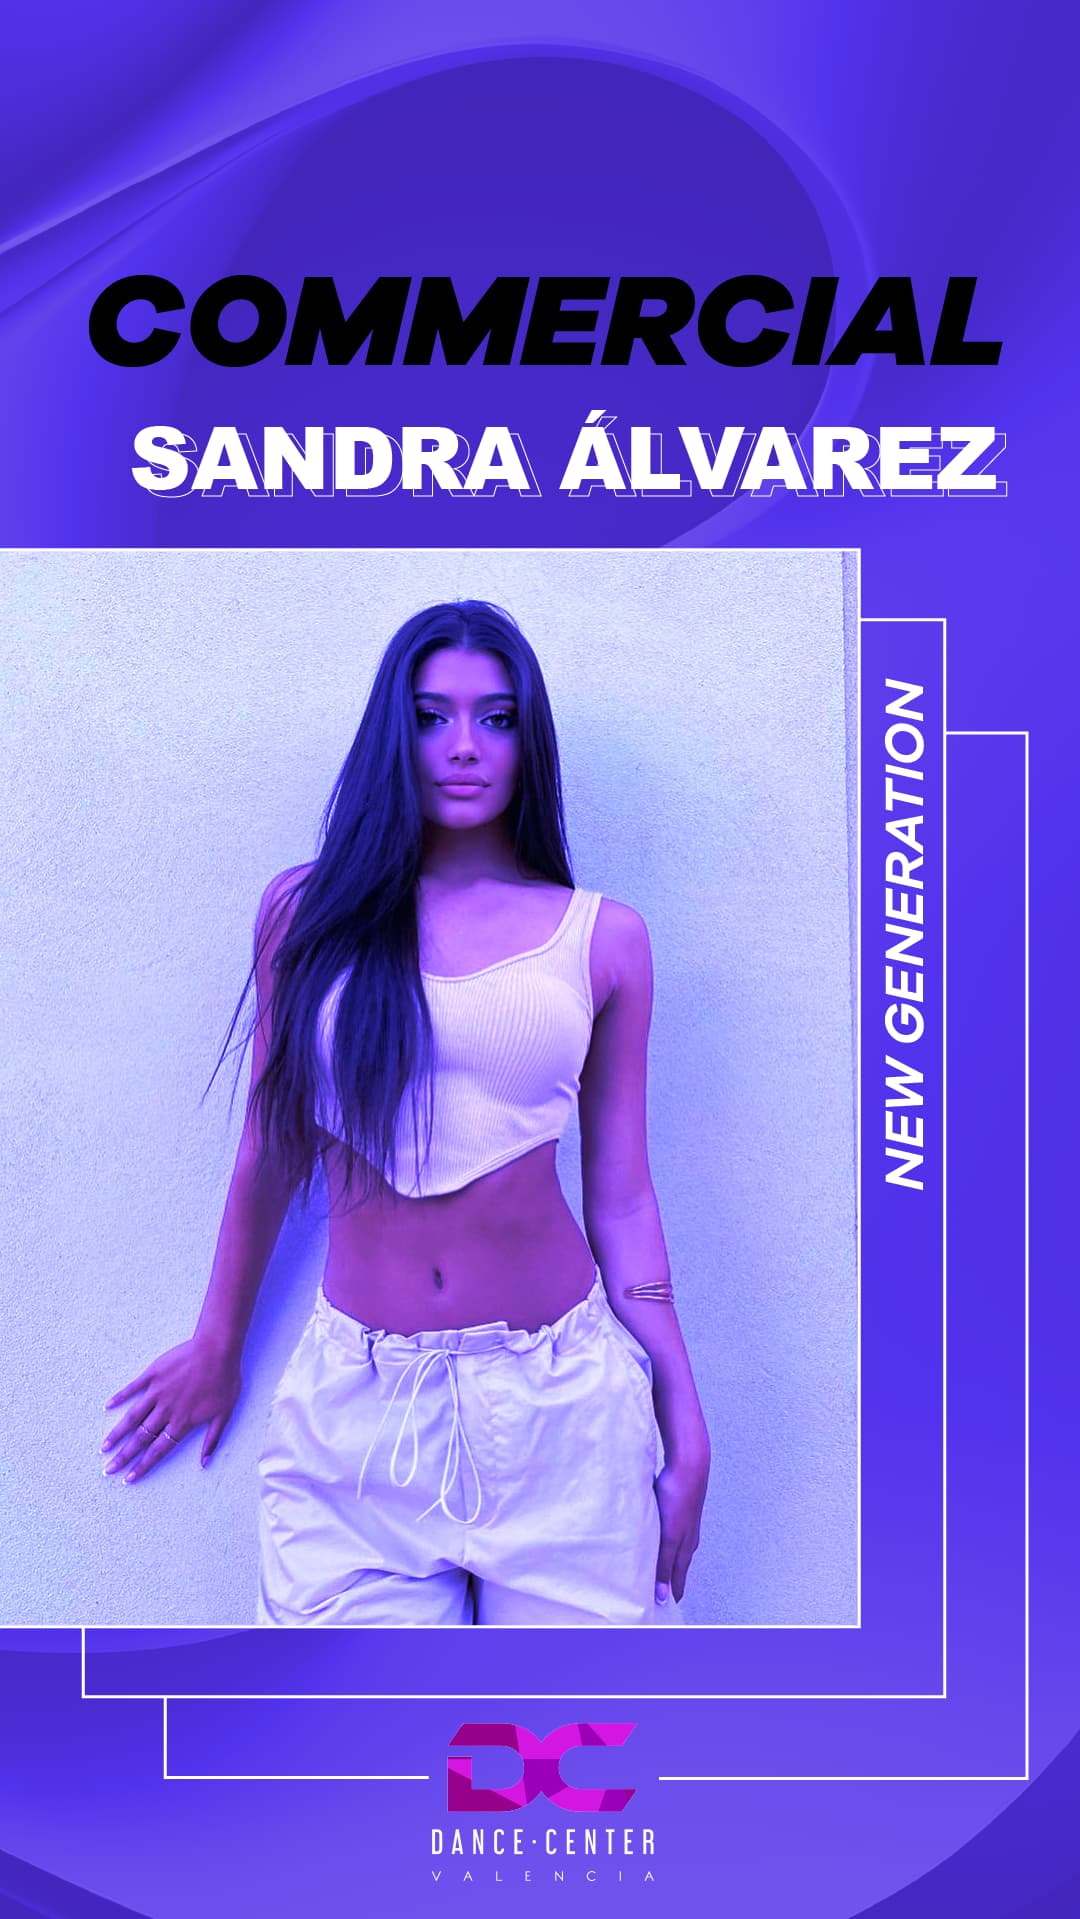 Sandra Alvarez Commercial